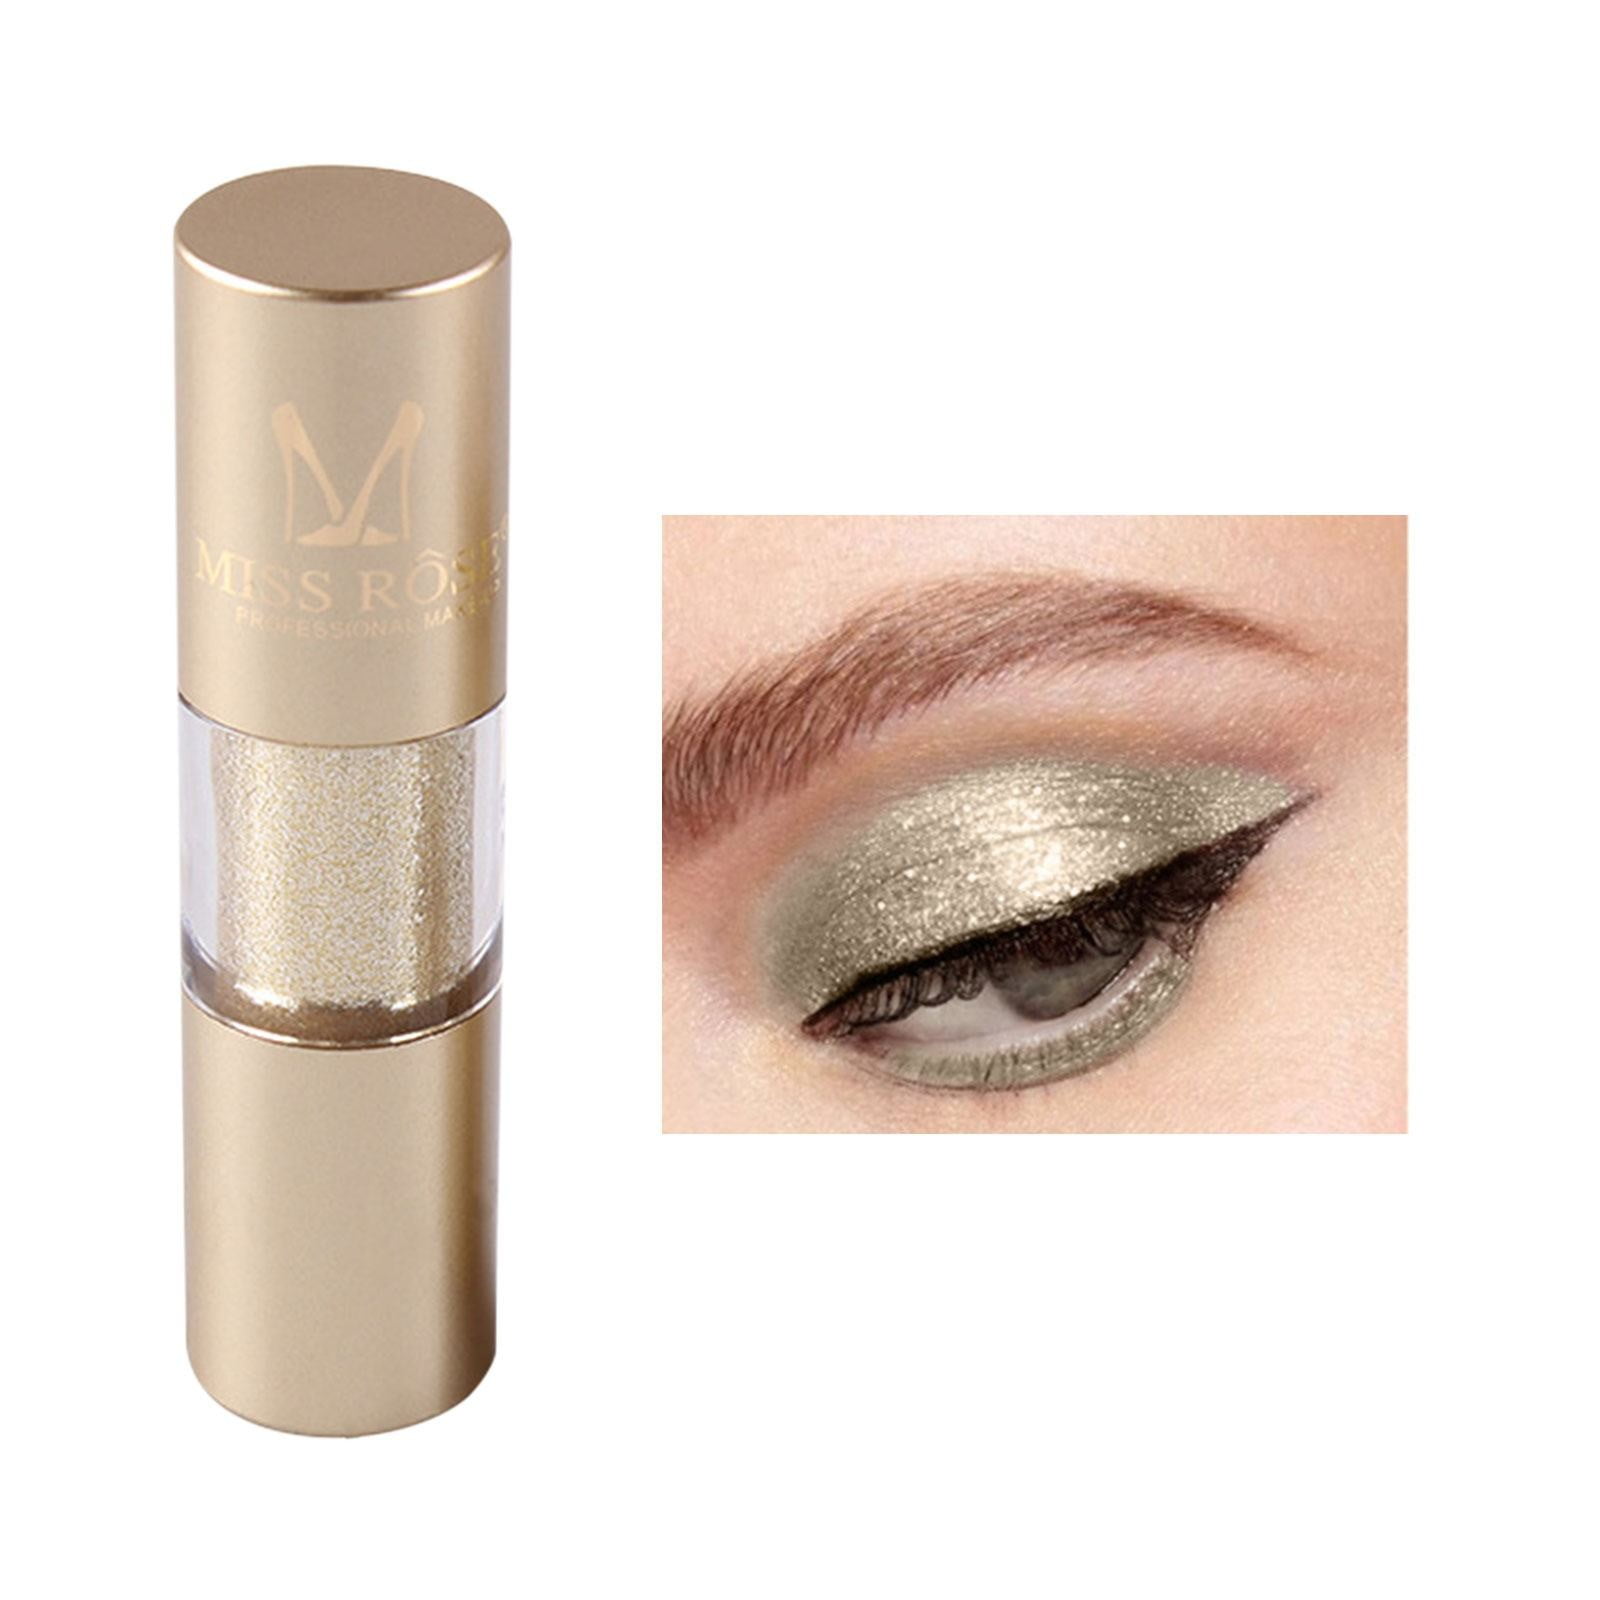 Mr17 Beauty Monochrome Pearlescent Shiny Gold Cong Powder Glitter Eyeshadow  Portable Eyeshadow - China Eye Shadow and Multicolor Eye Shadow price